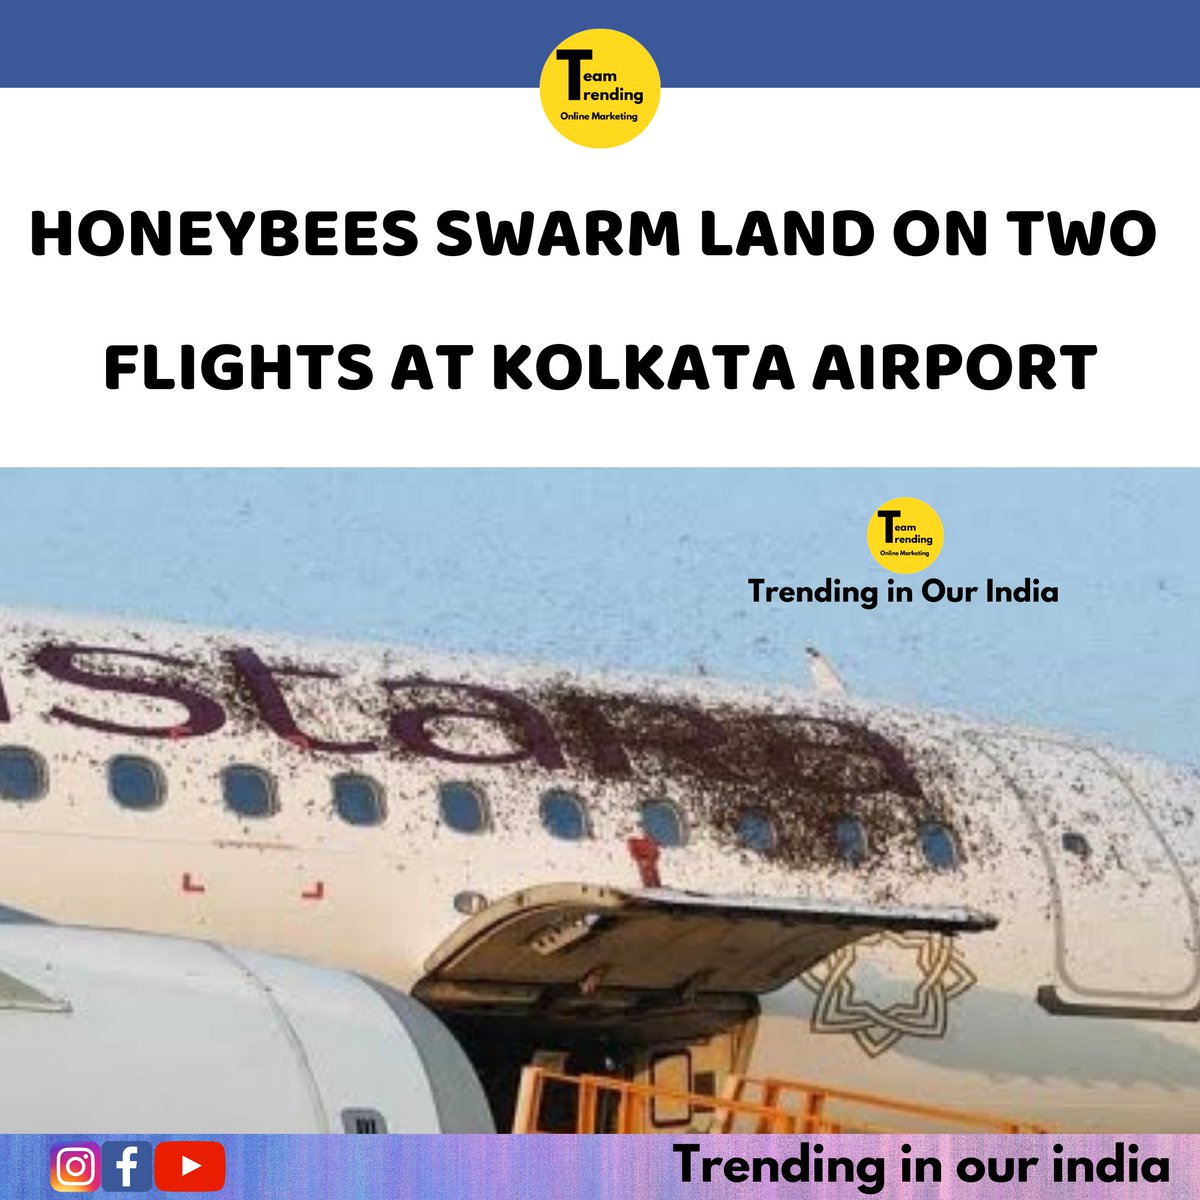 Honeybees swarm land on two flights at Kolkata airport

Read more - instagram.com/p/CIQuPKUnJeV/…
•
•
•
•
•
#kolkata #kolkatabuzz #india #indian #indianews #newsindia #trendinginourindia